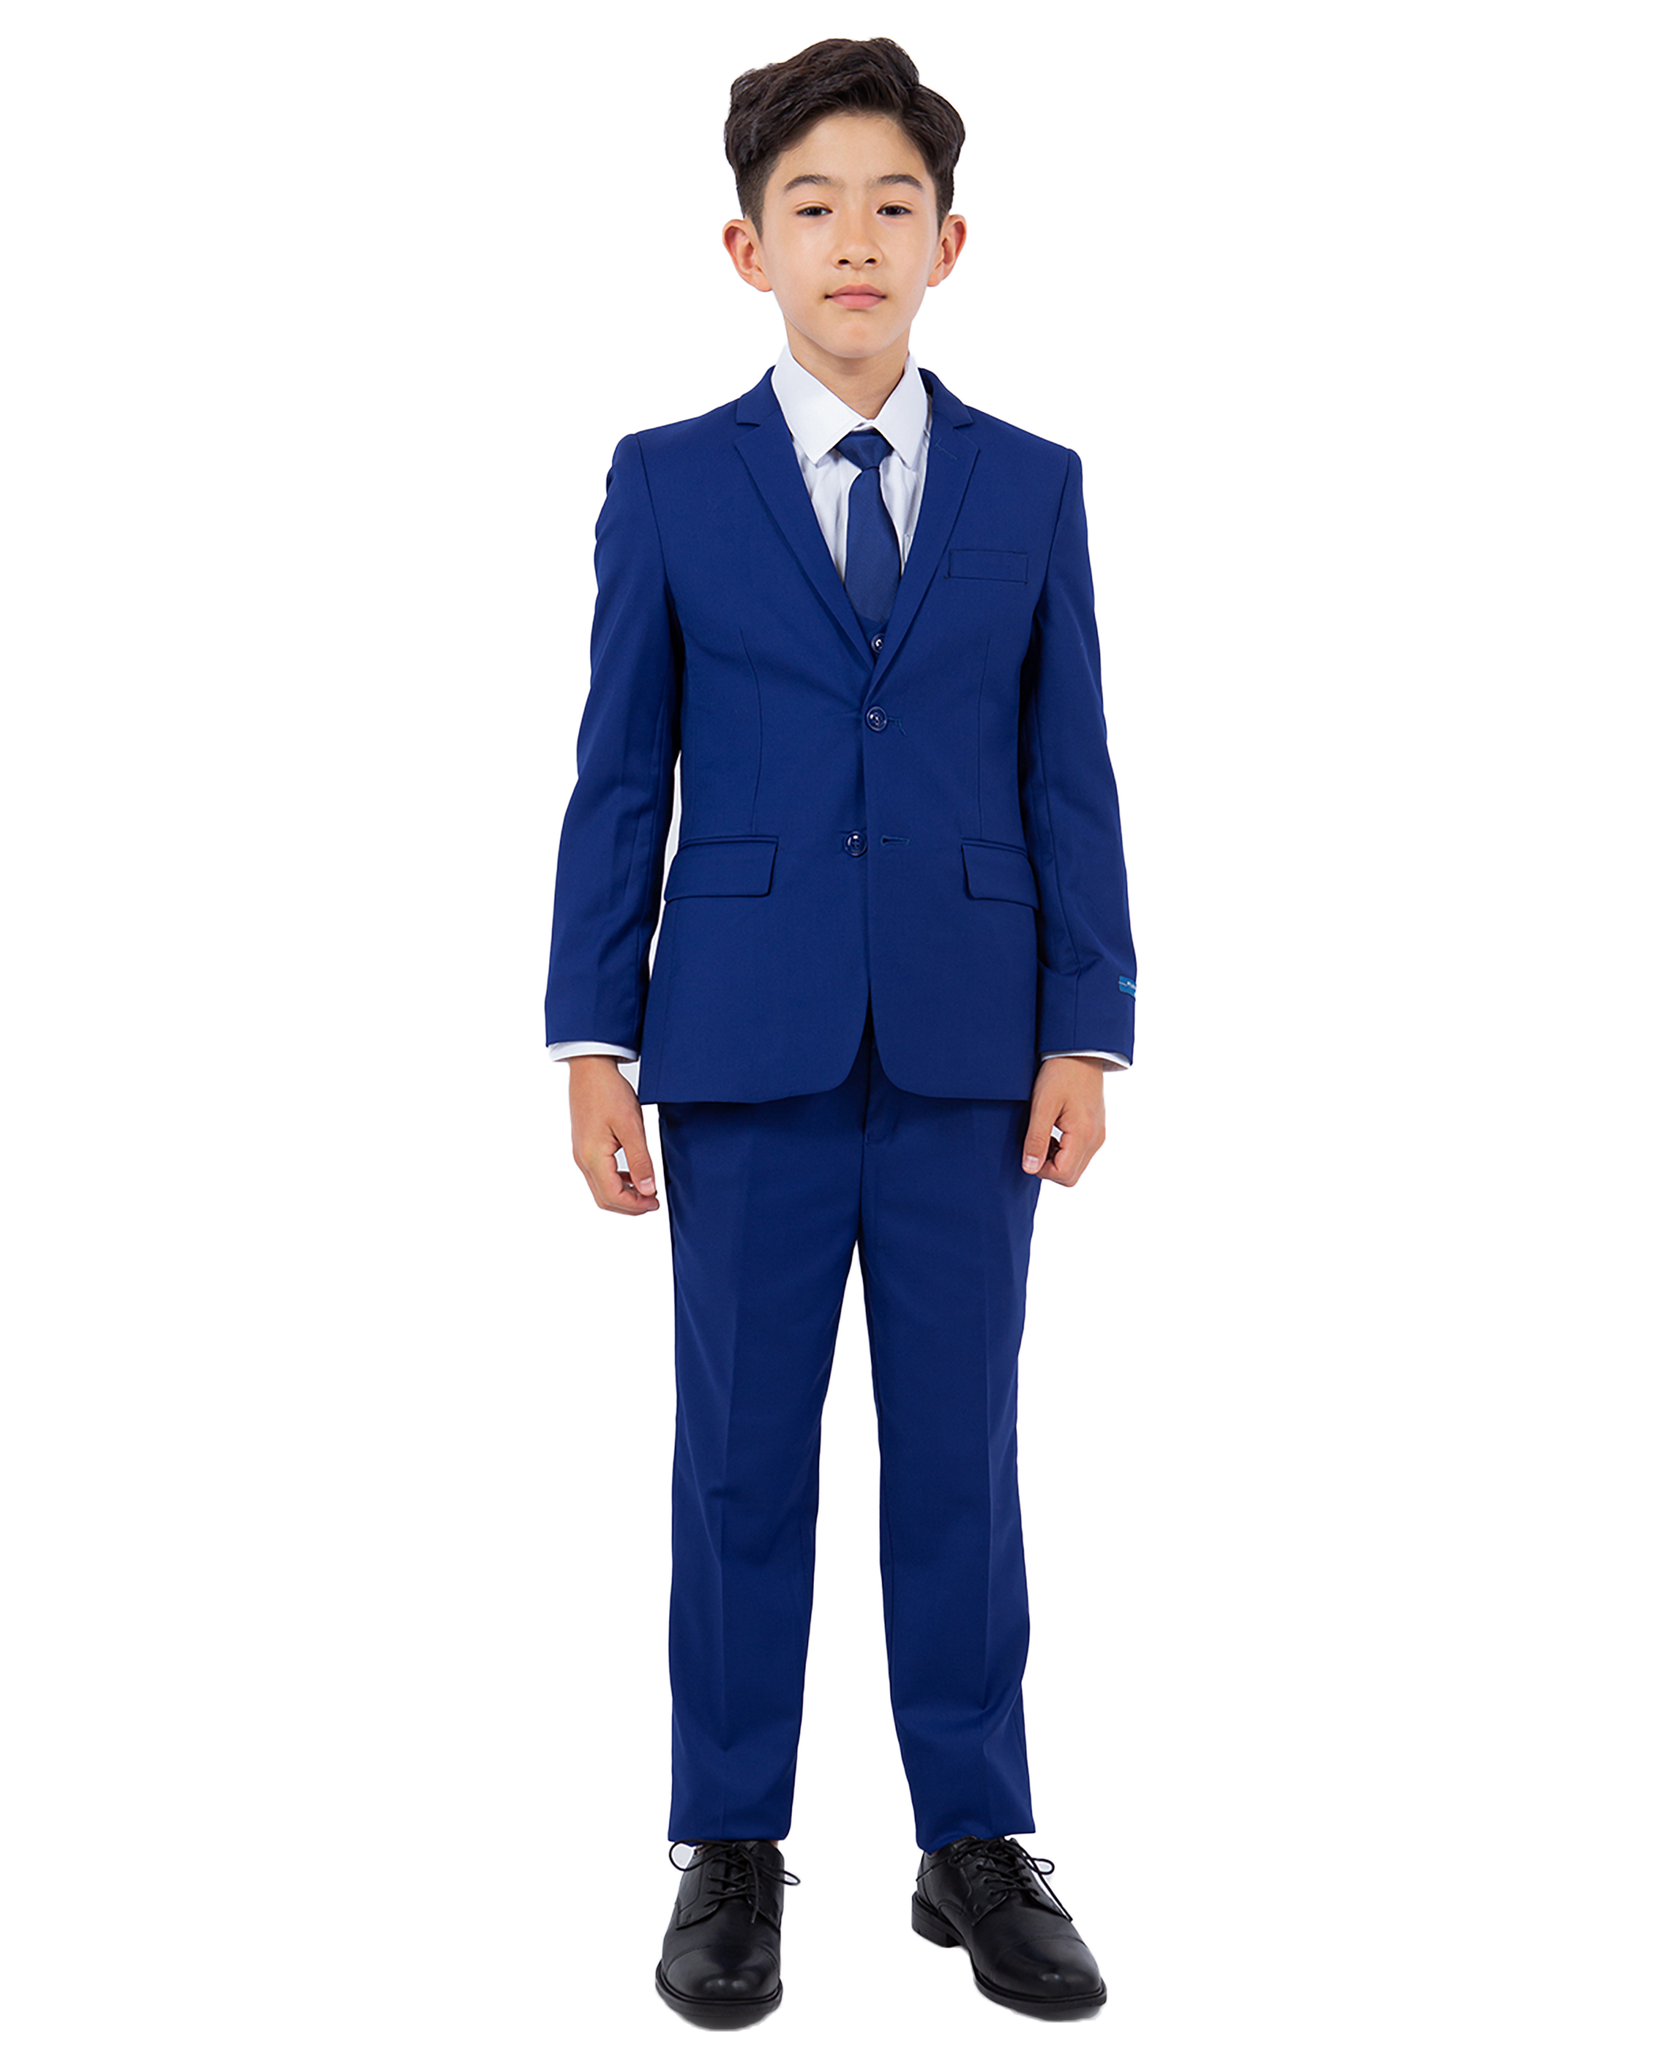 Perry Ellis Boys Suit Solid Royal Blue